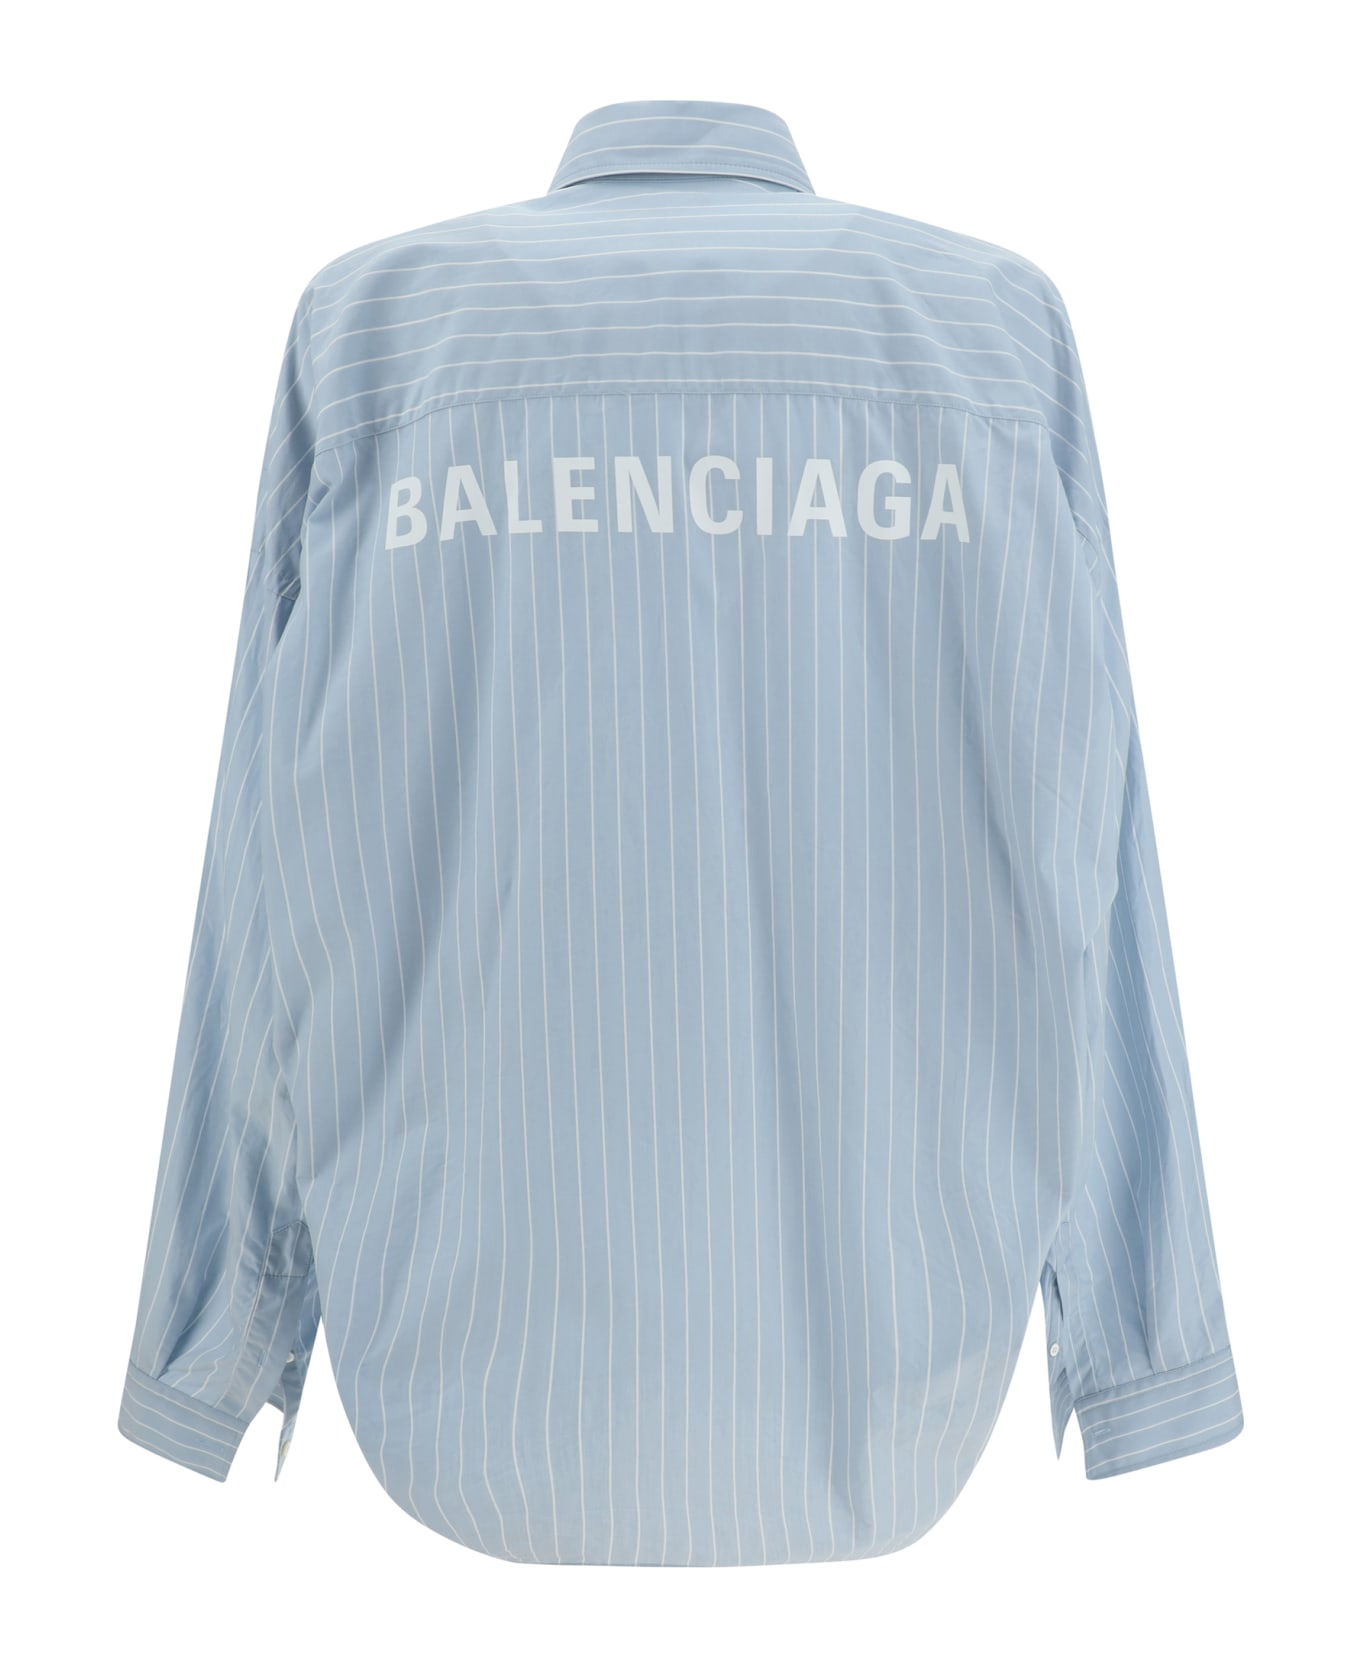 Balenciaga Shirt - Light Blue/white